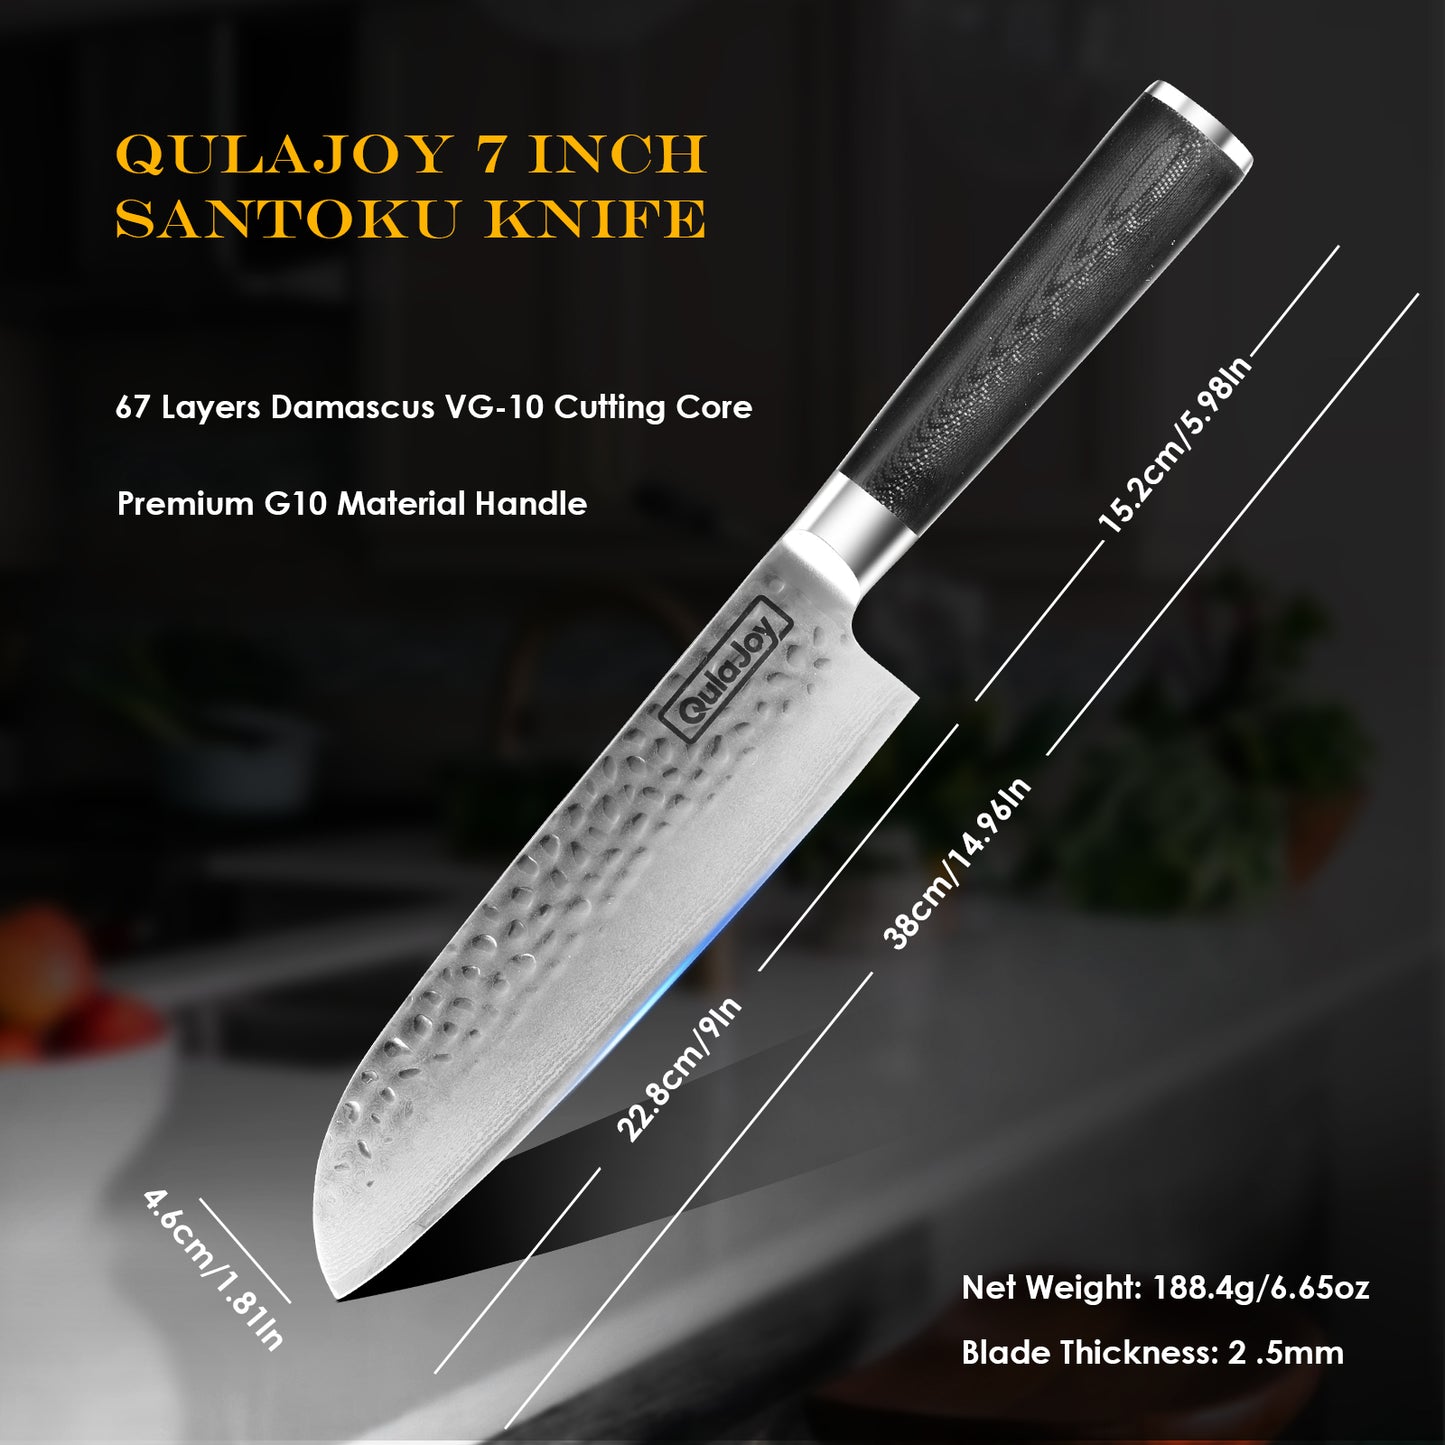 Qulajoy 7 Inch Santoku Knife- Ultra Sharp Japanese 67 Layers Damascus VG-10 Steel Core - Professional Hammered Chef Knife - Ergonomic G10 Handle With Sheath